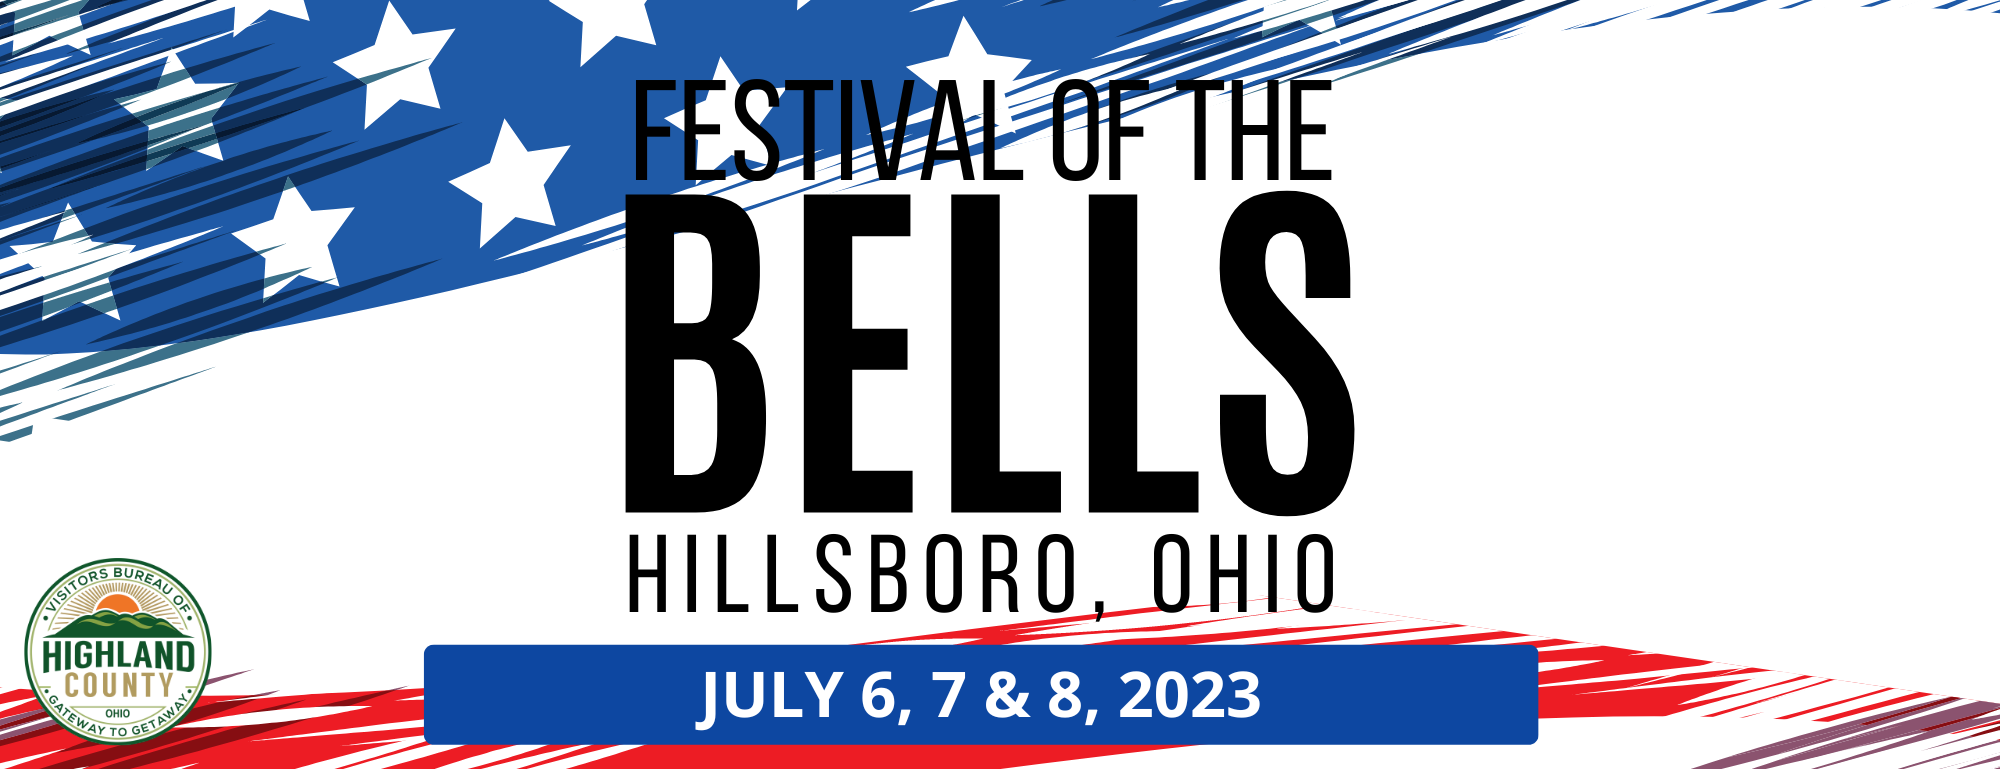 Festival of the Bells in Hillsboro, Ohio